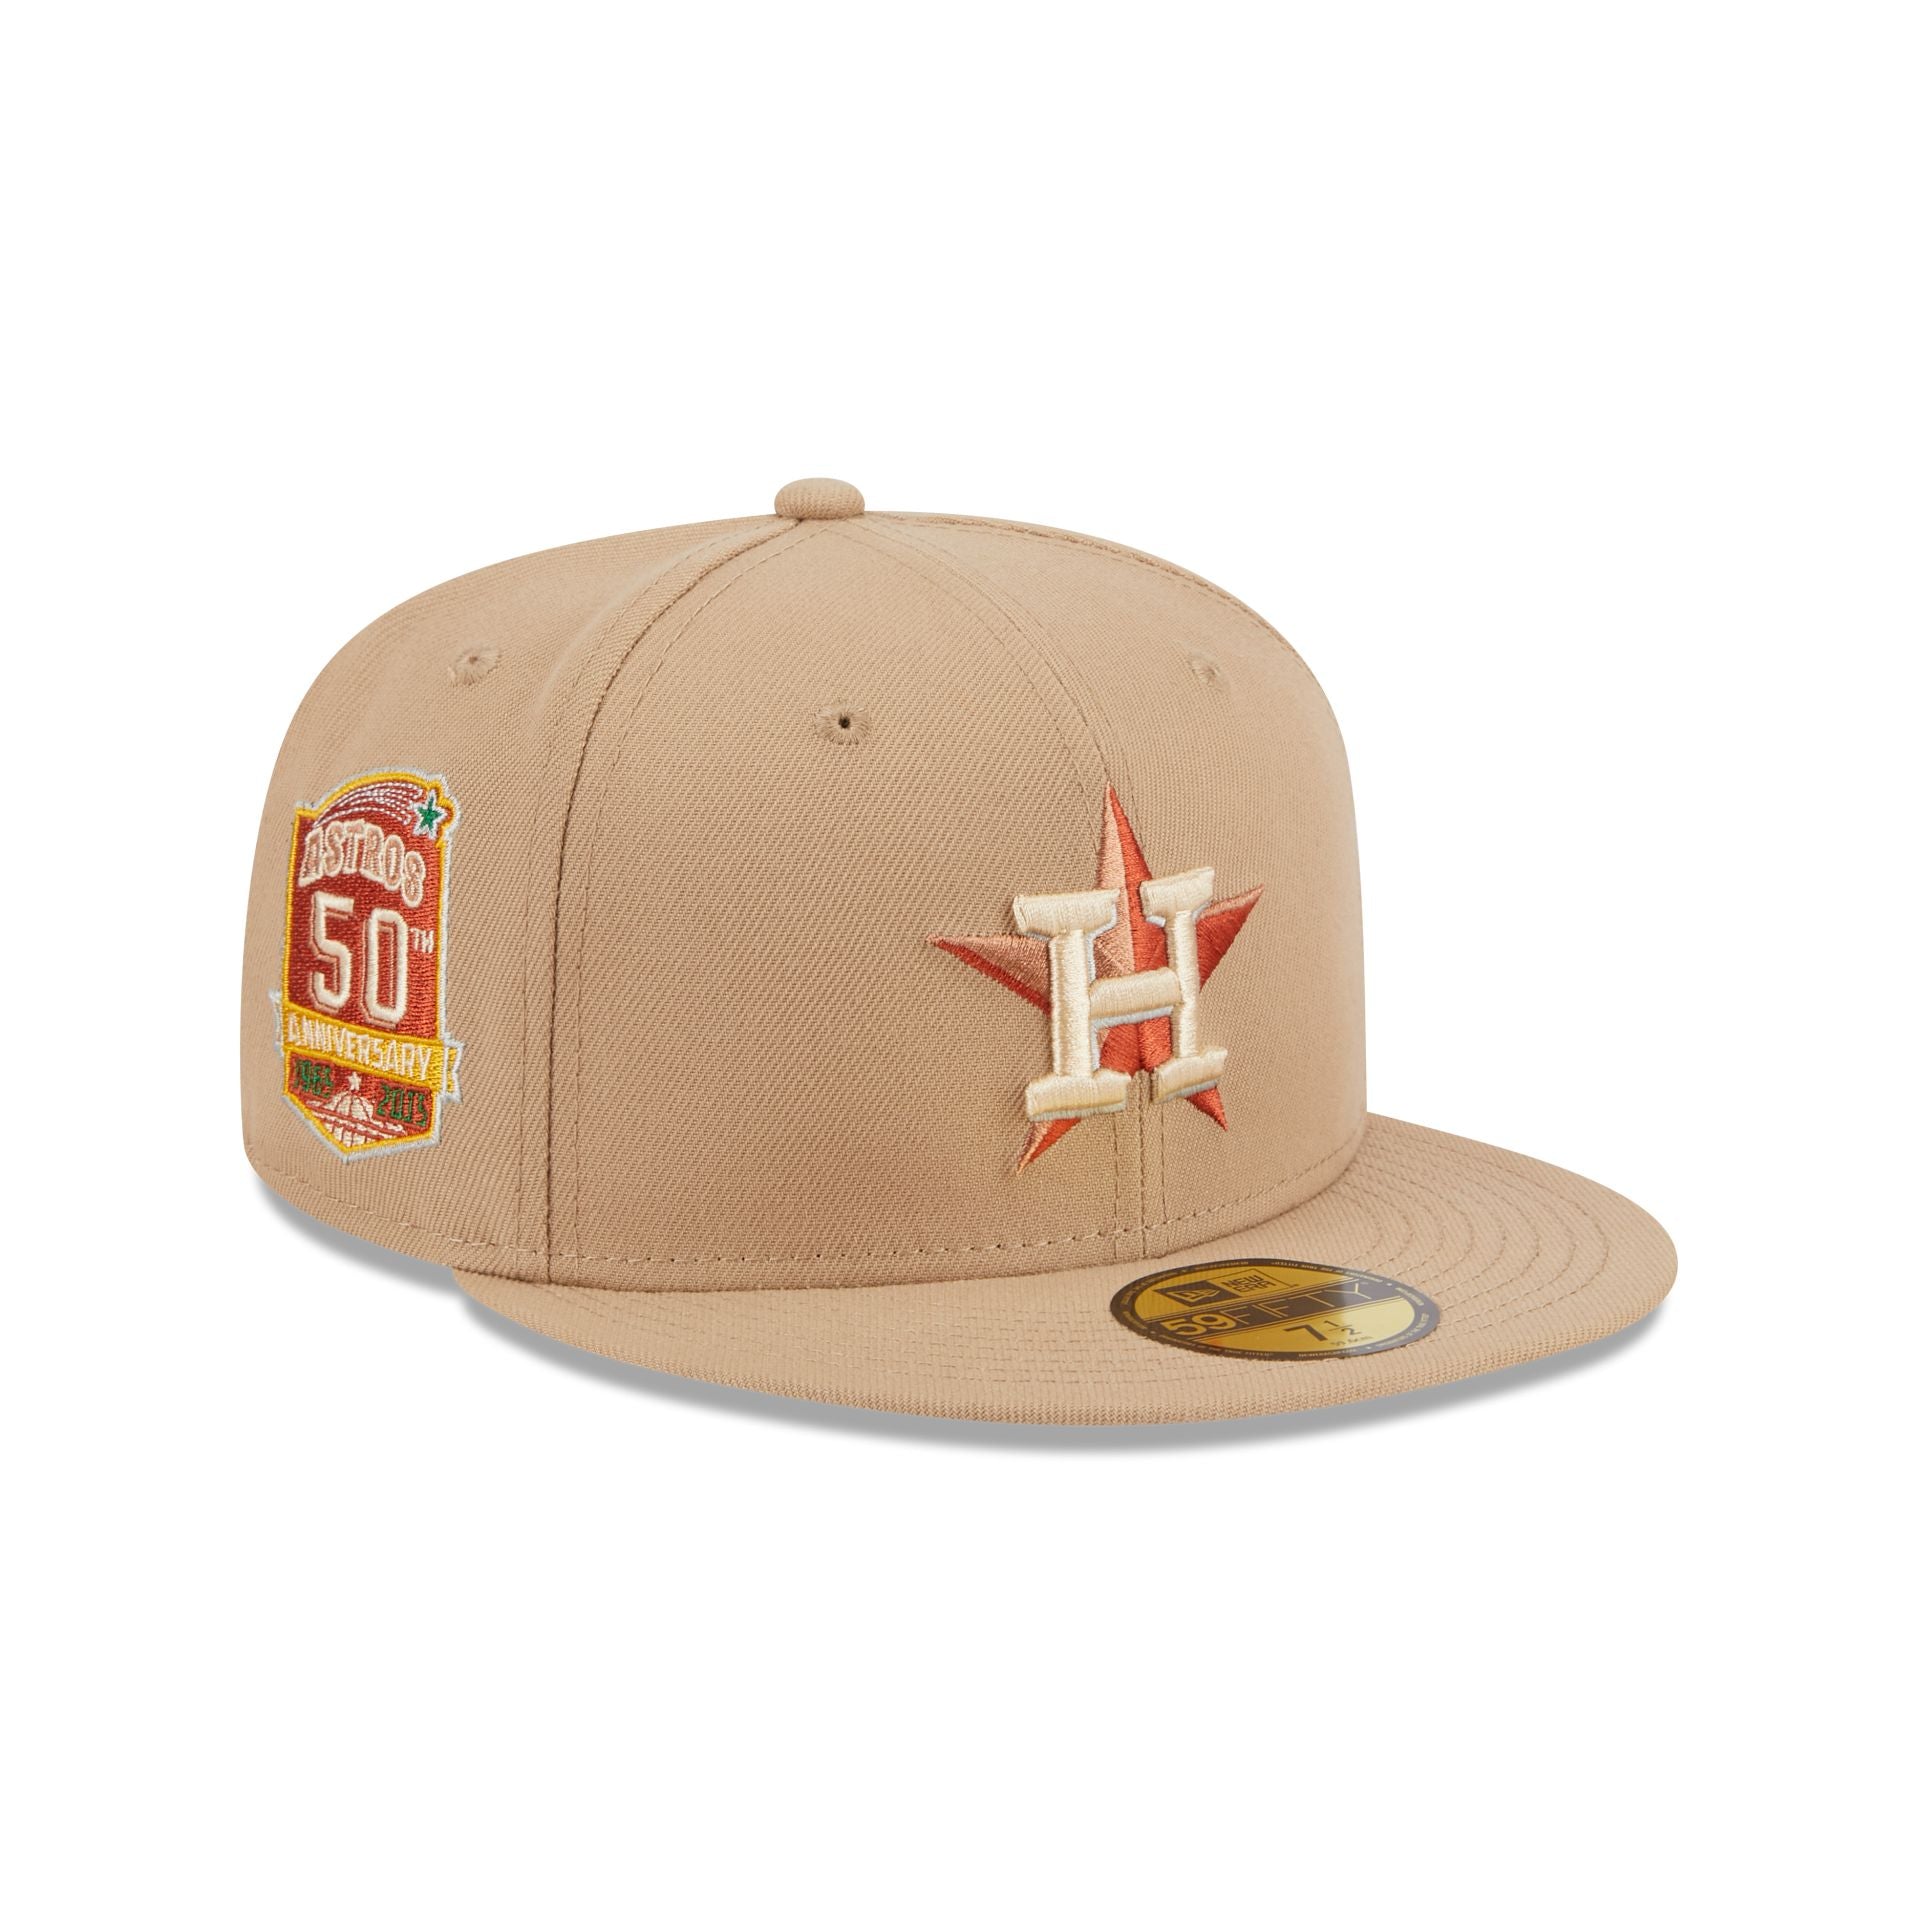 astros 50th anniversary hat